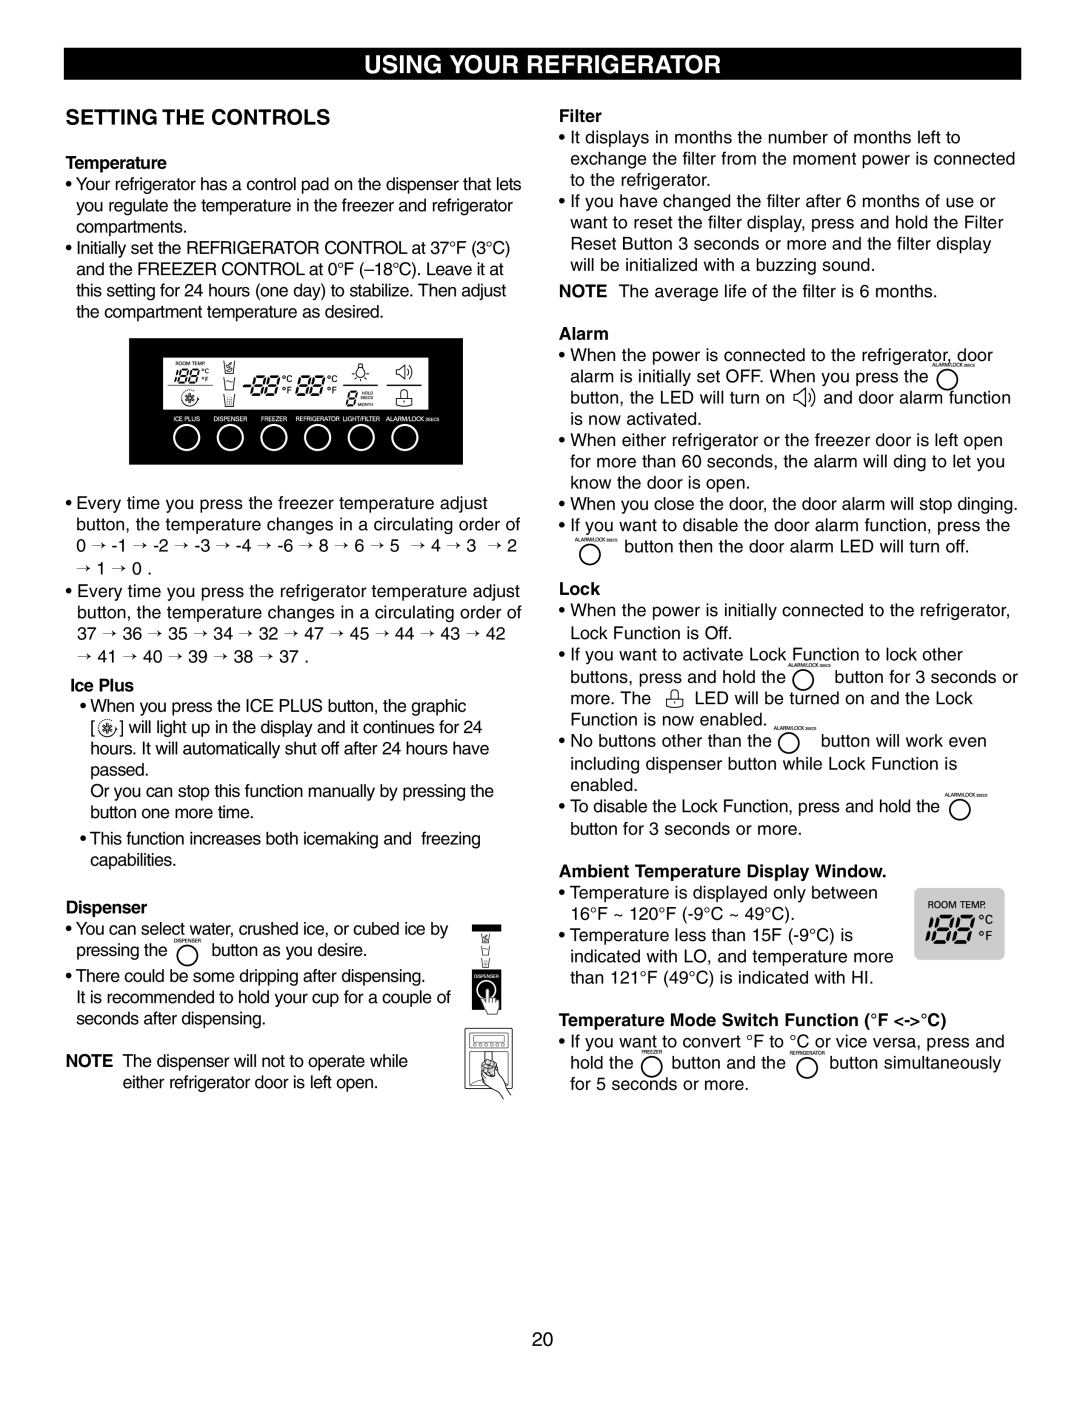 LG Electronics LFX25950 manual Using Your Refrigerator, Setting The Controls 